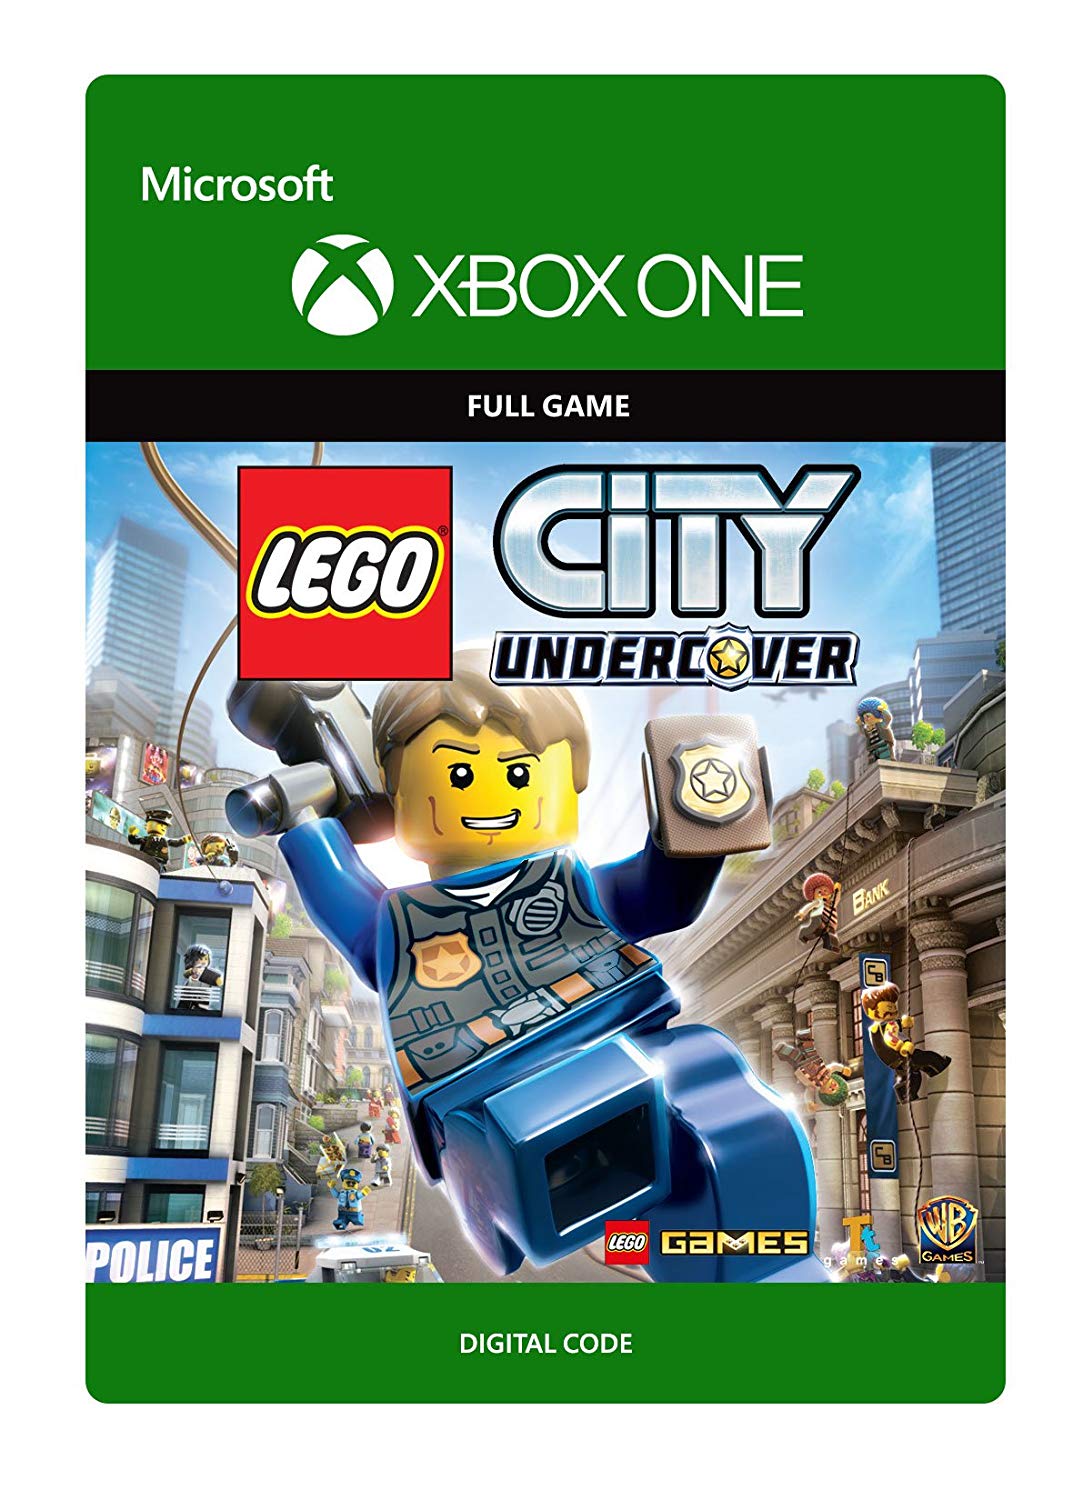 LEGO City Undercover Digital Download Key (Xbox One): GLOBAL (works worldwide)